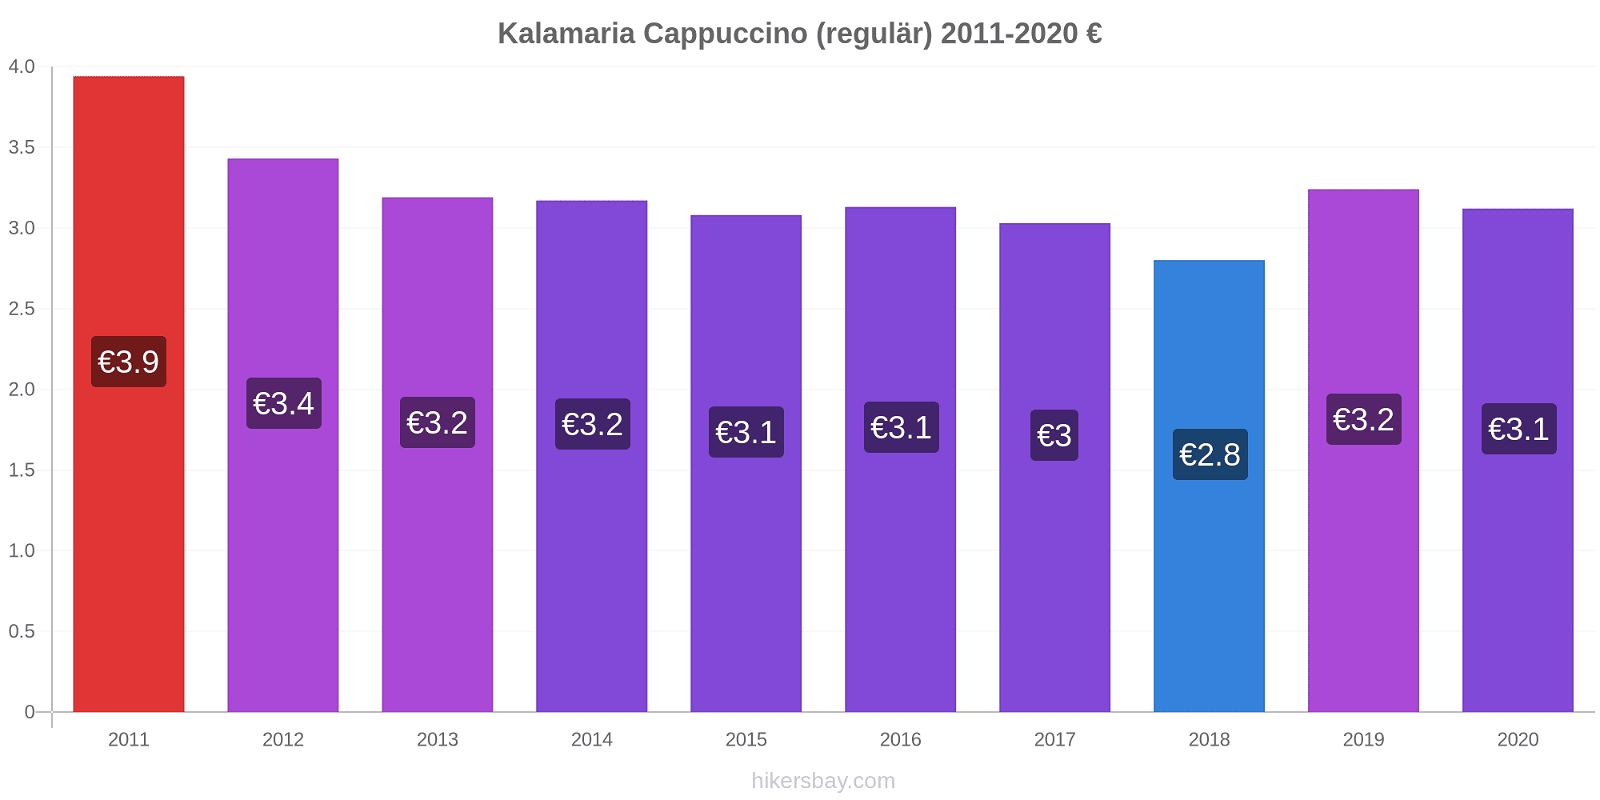 Kalamaria Preisänderungen Cappuccino (regulär) hikersbay.com